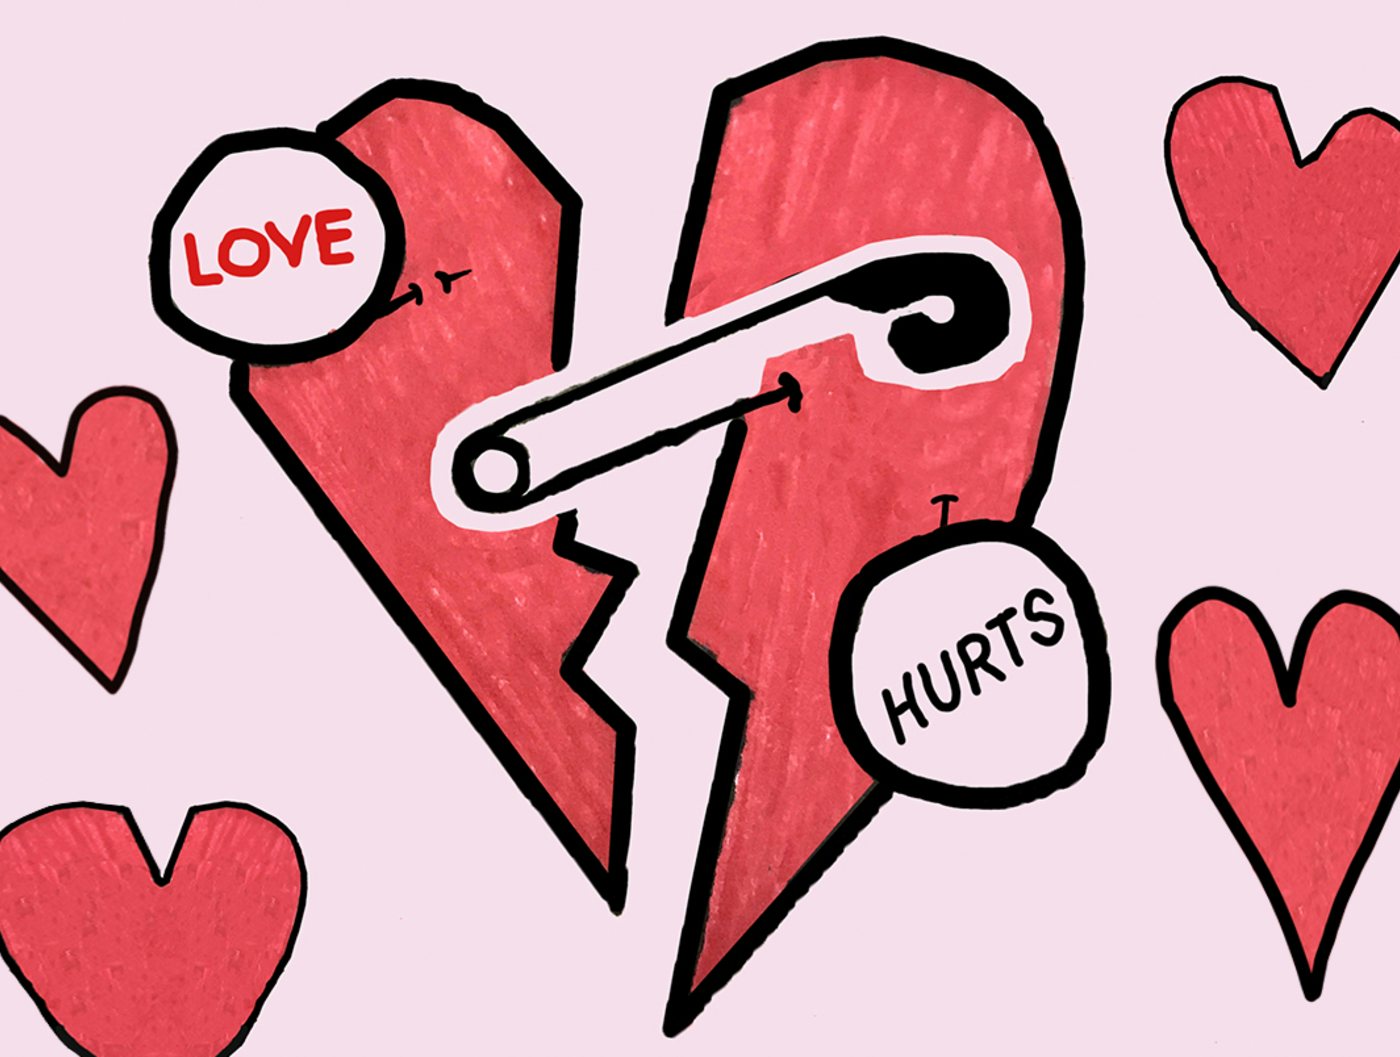 CAC Revelry: Love Hurts